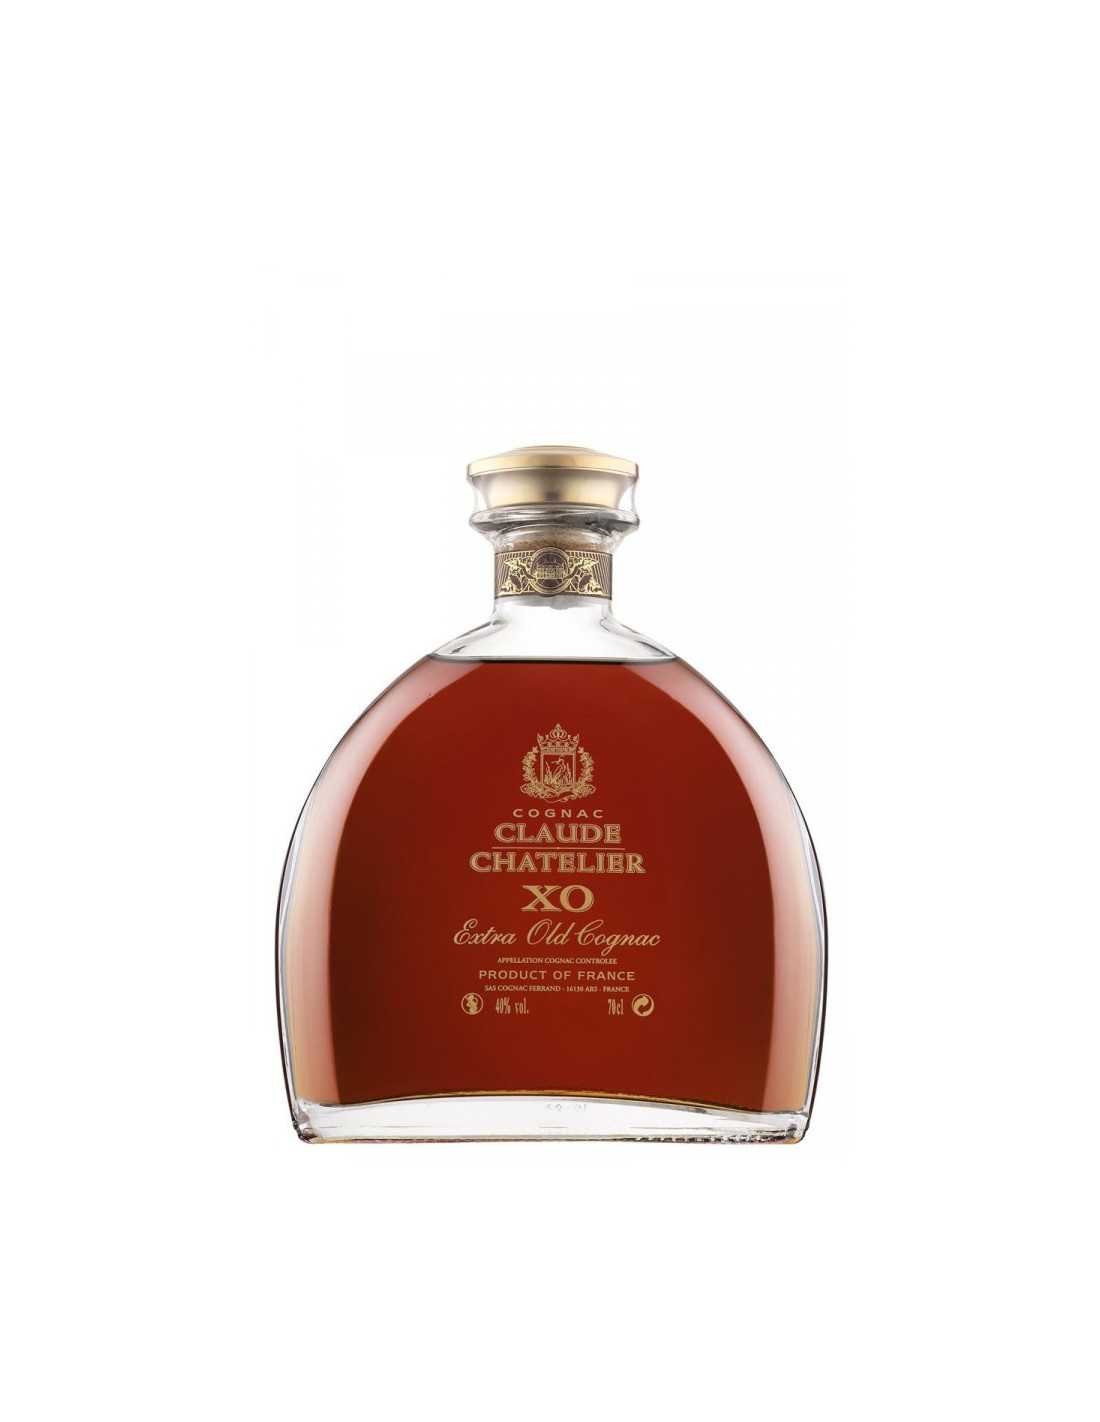 XO CLAUDE Gift Cognac, 40% CHATELIER + COGNAC Box